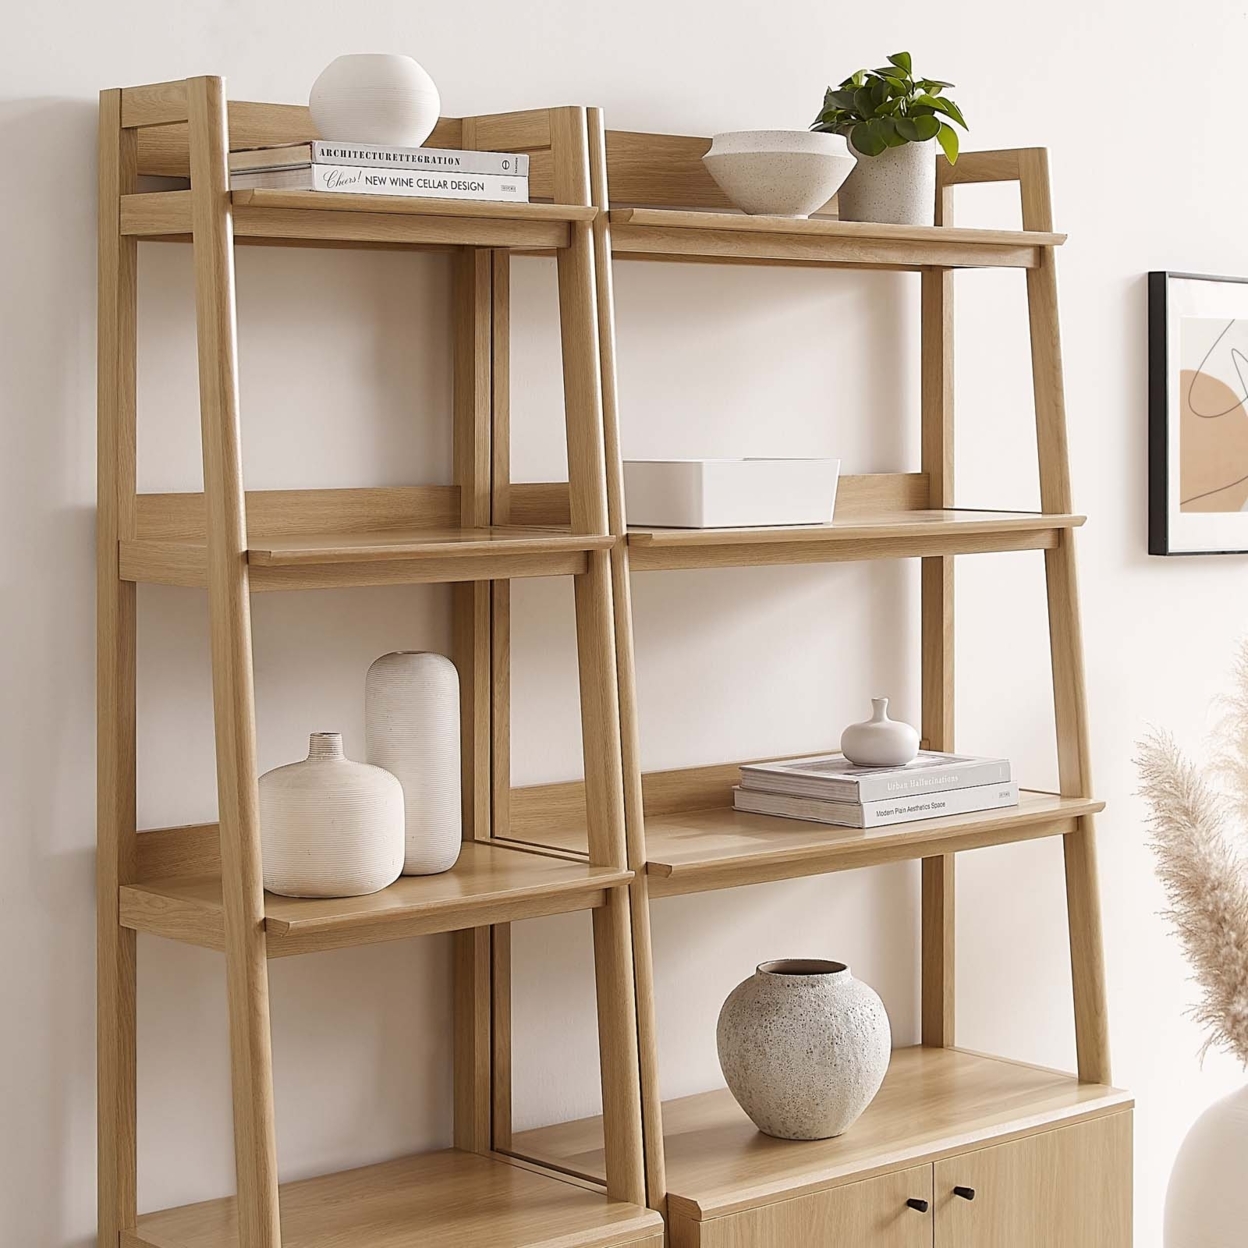 Bixby Wood Bookshelves - Set Of 2, Oak